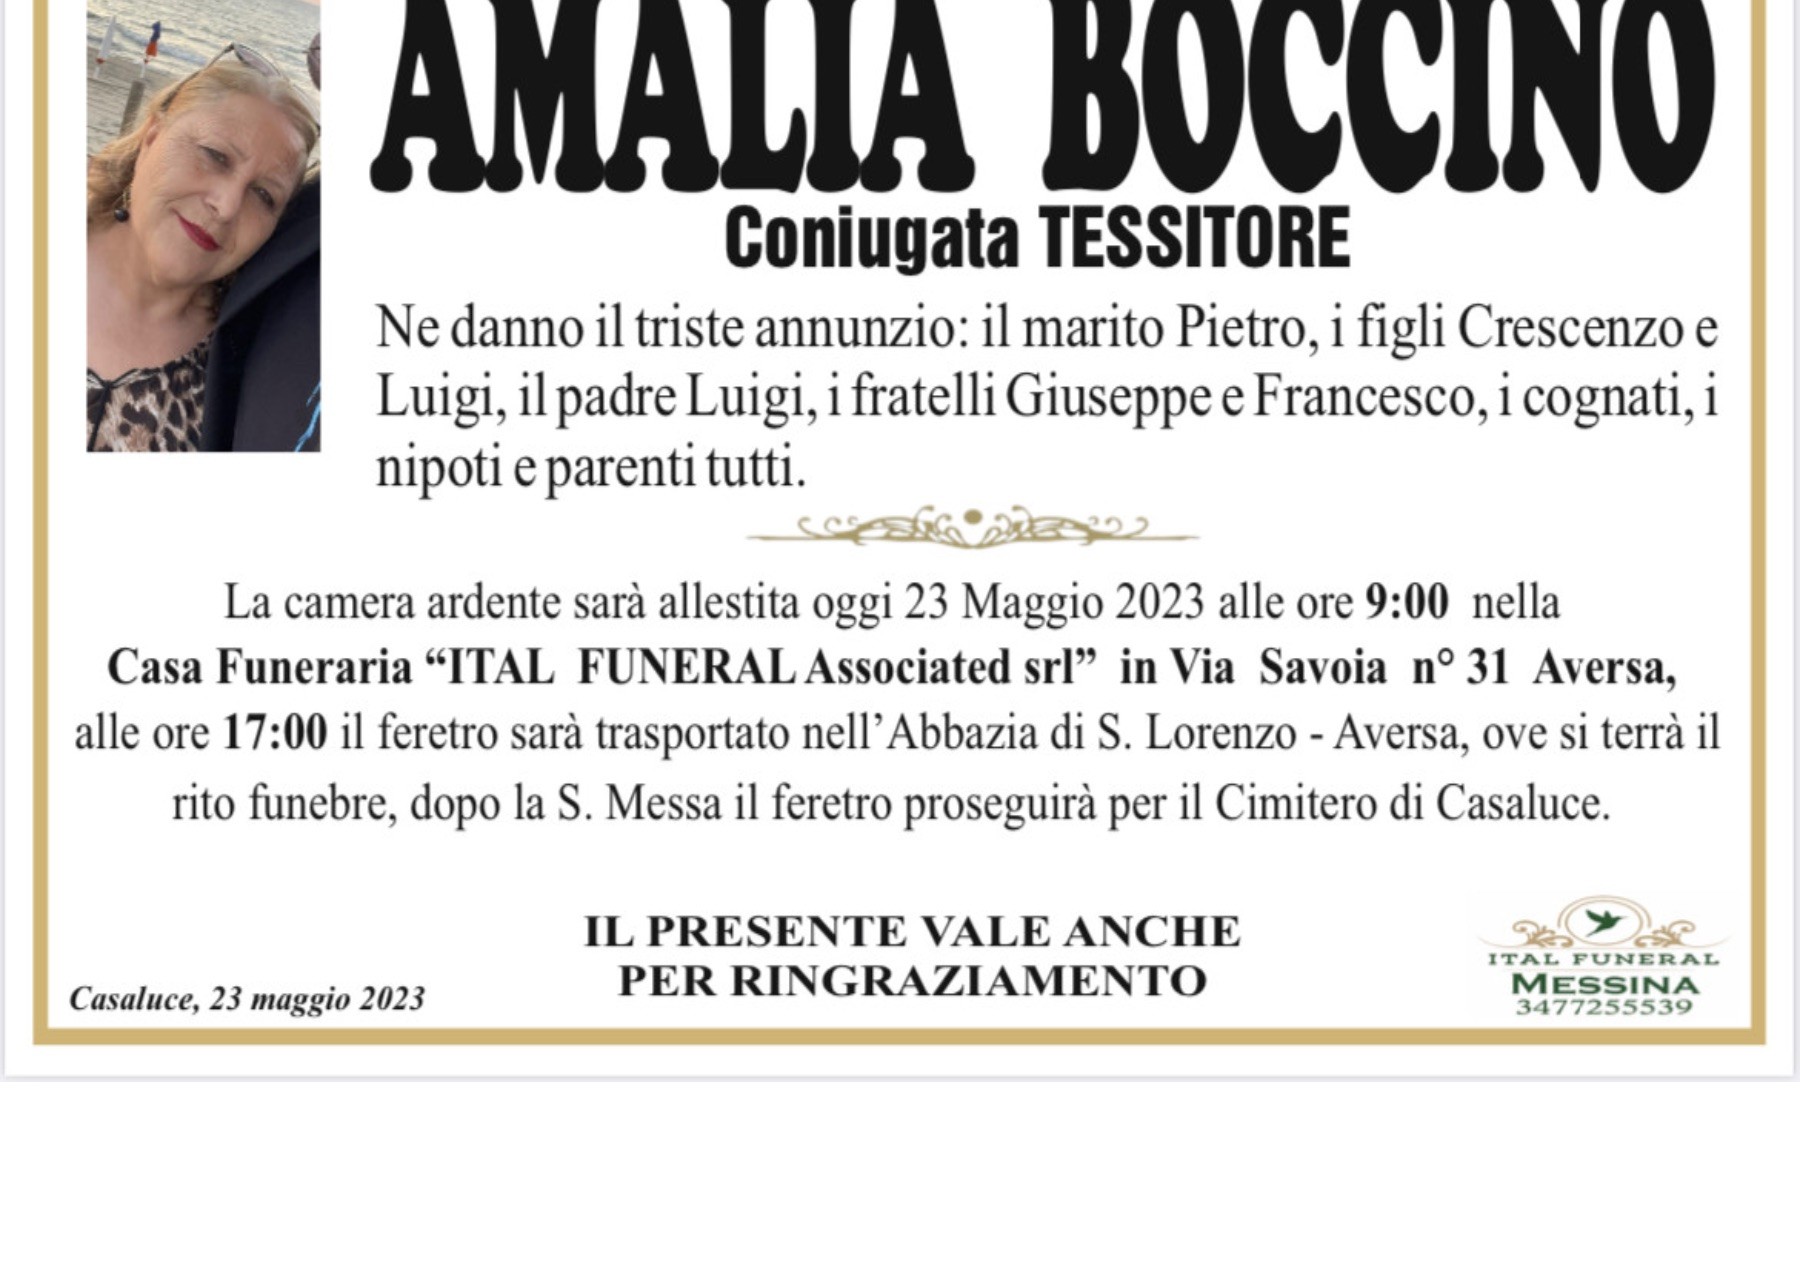 Amalia Boccino